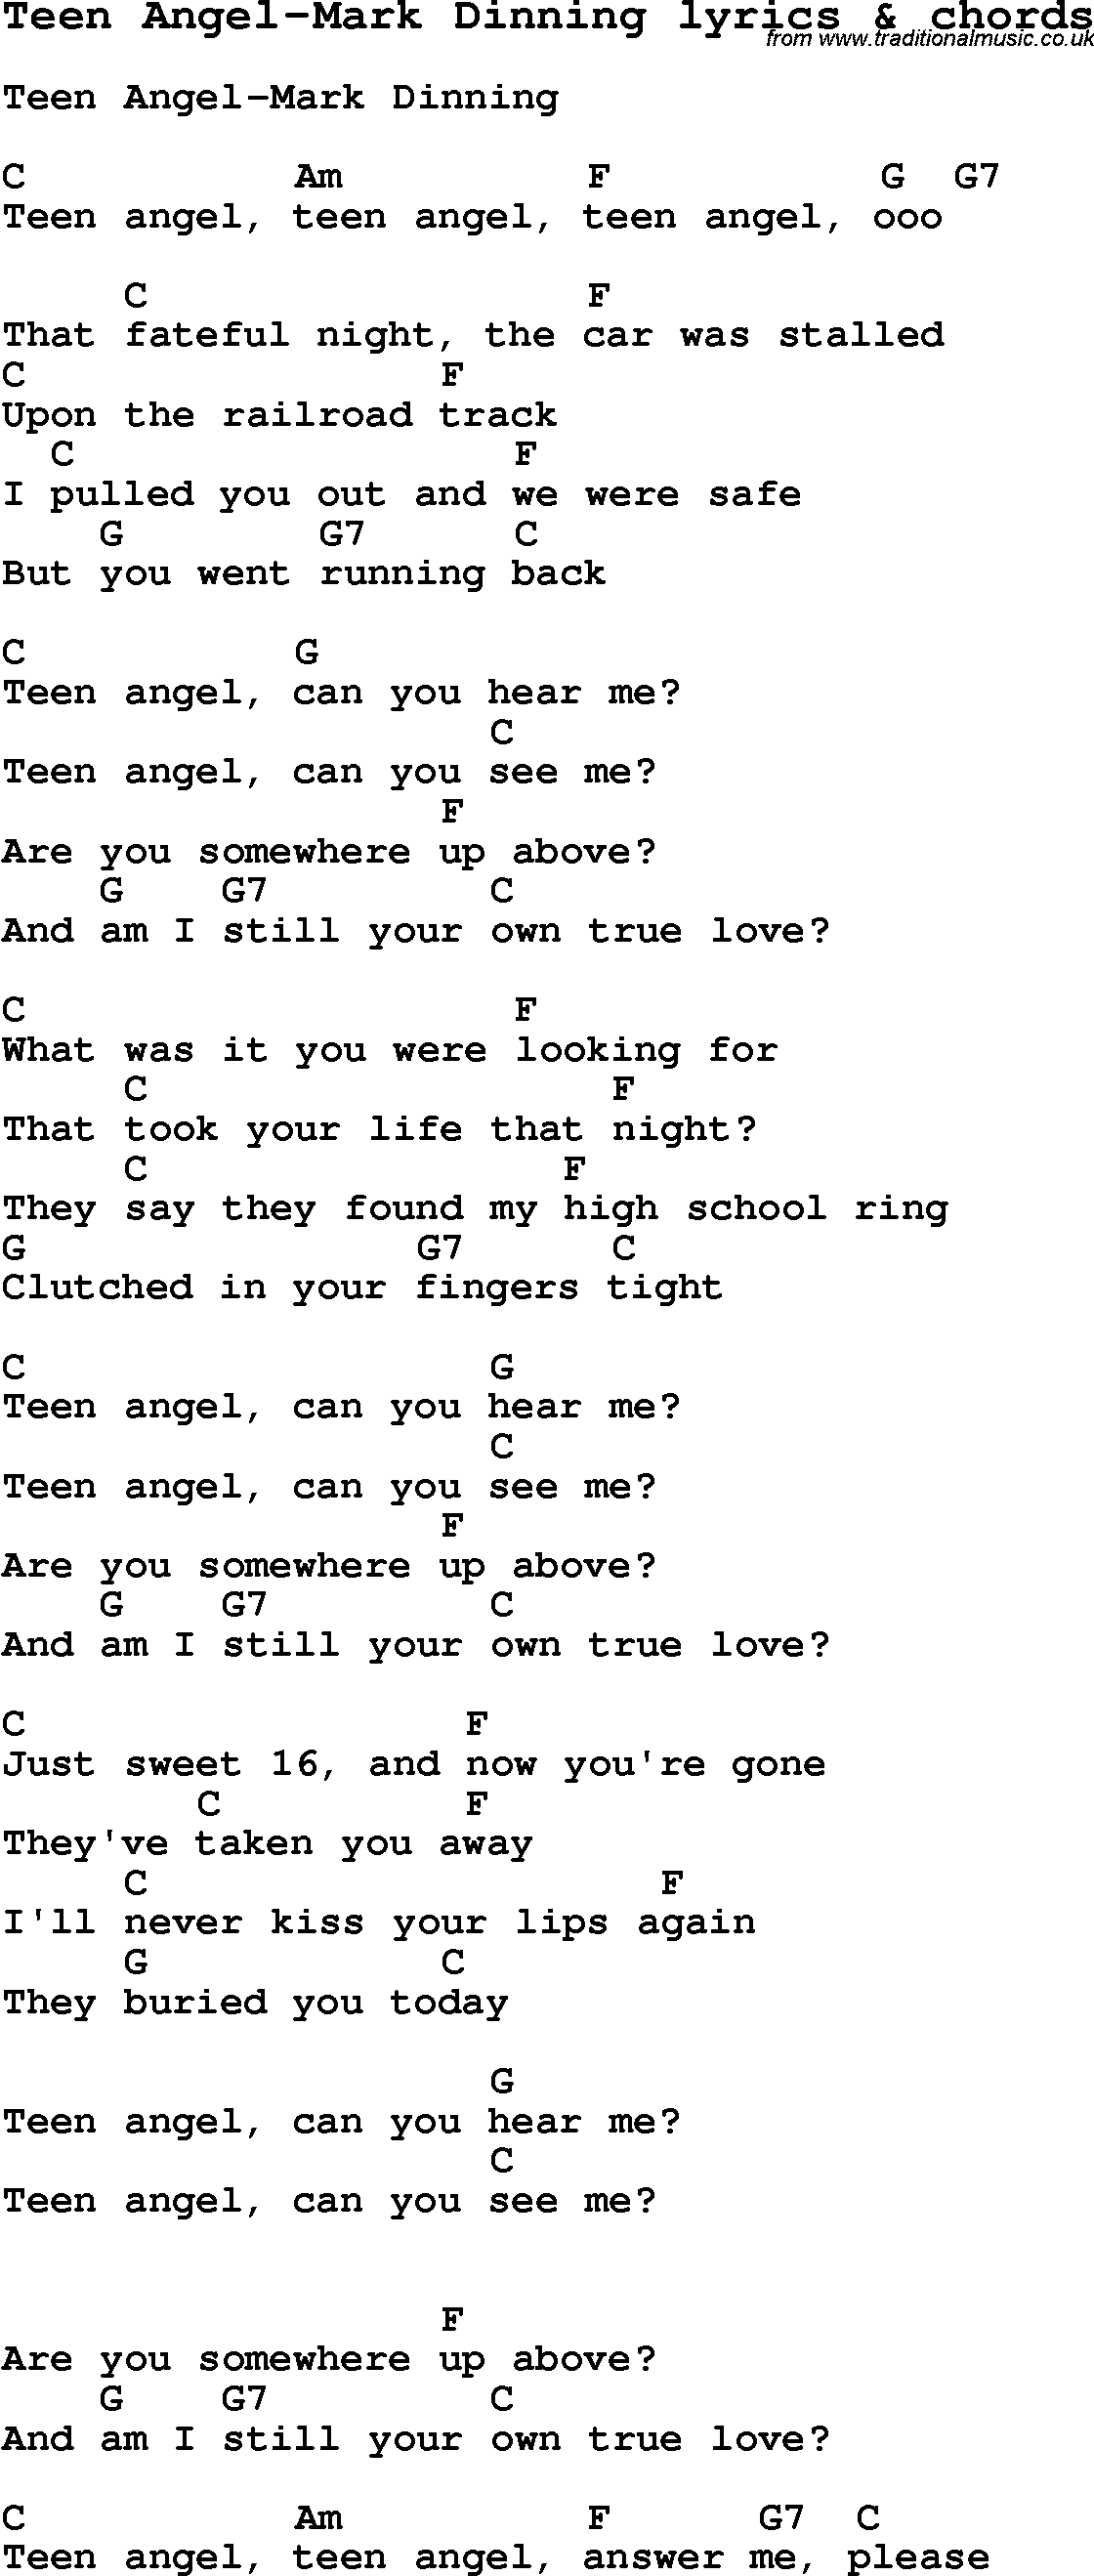 Love Song Lyrics for: Teen Angel-Mark Dinning with chords for Ukulele, Guitar Banjo etc.